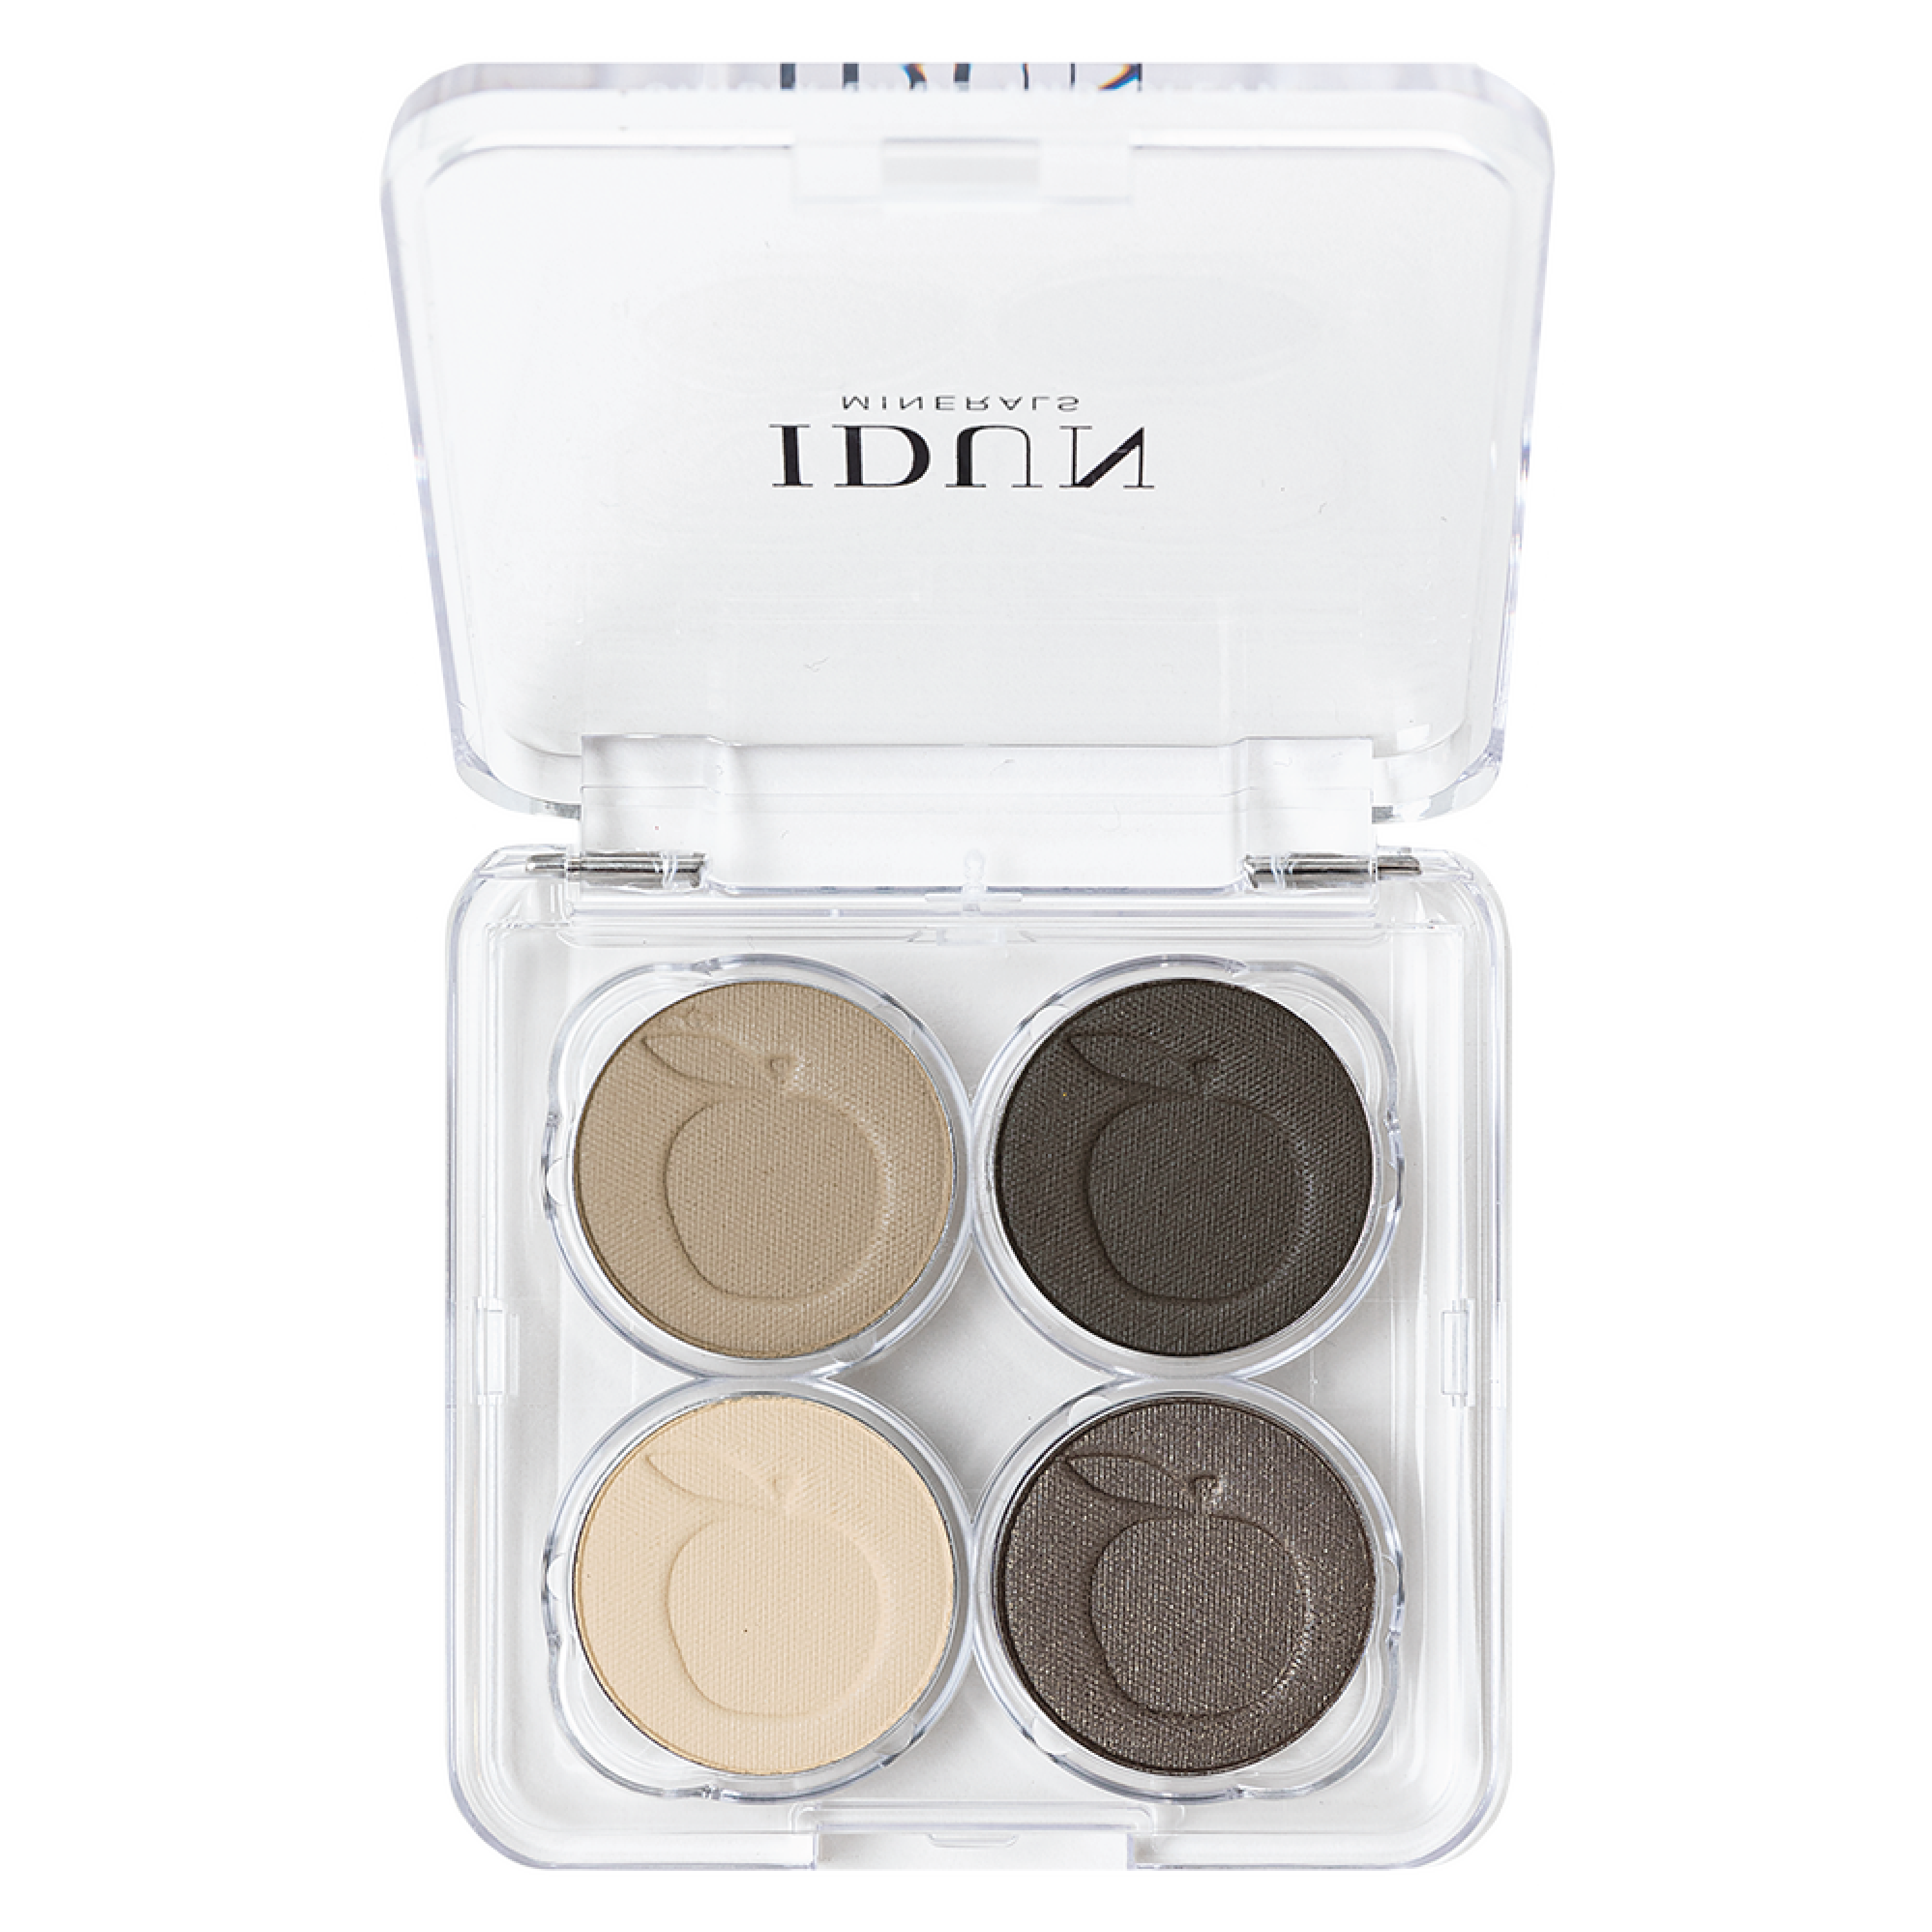 IDUN Minerals Eyeshadow Palette, Lejongap, 4 g